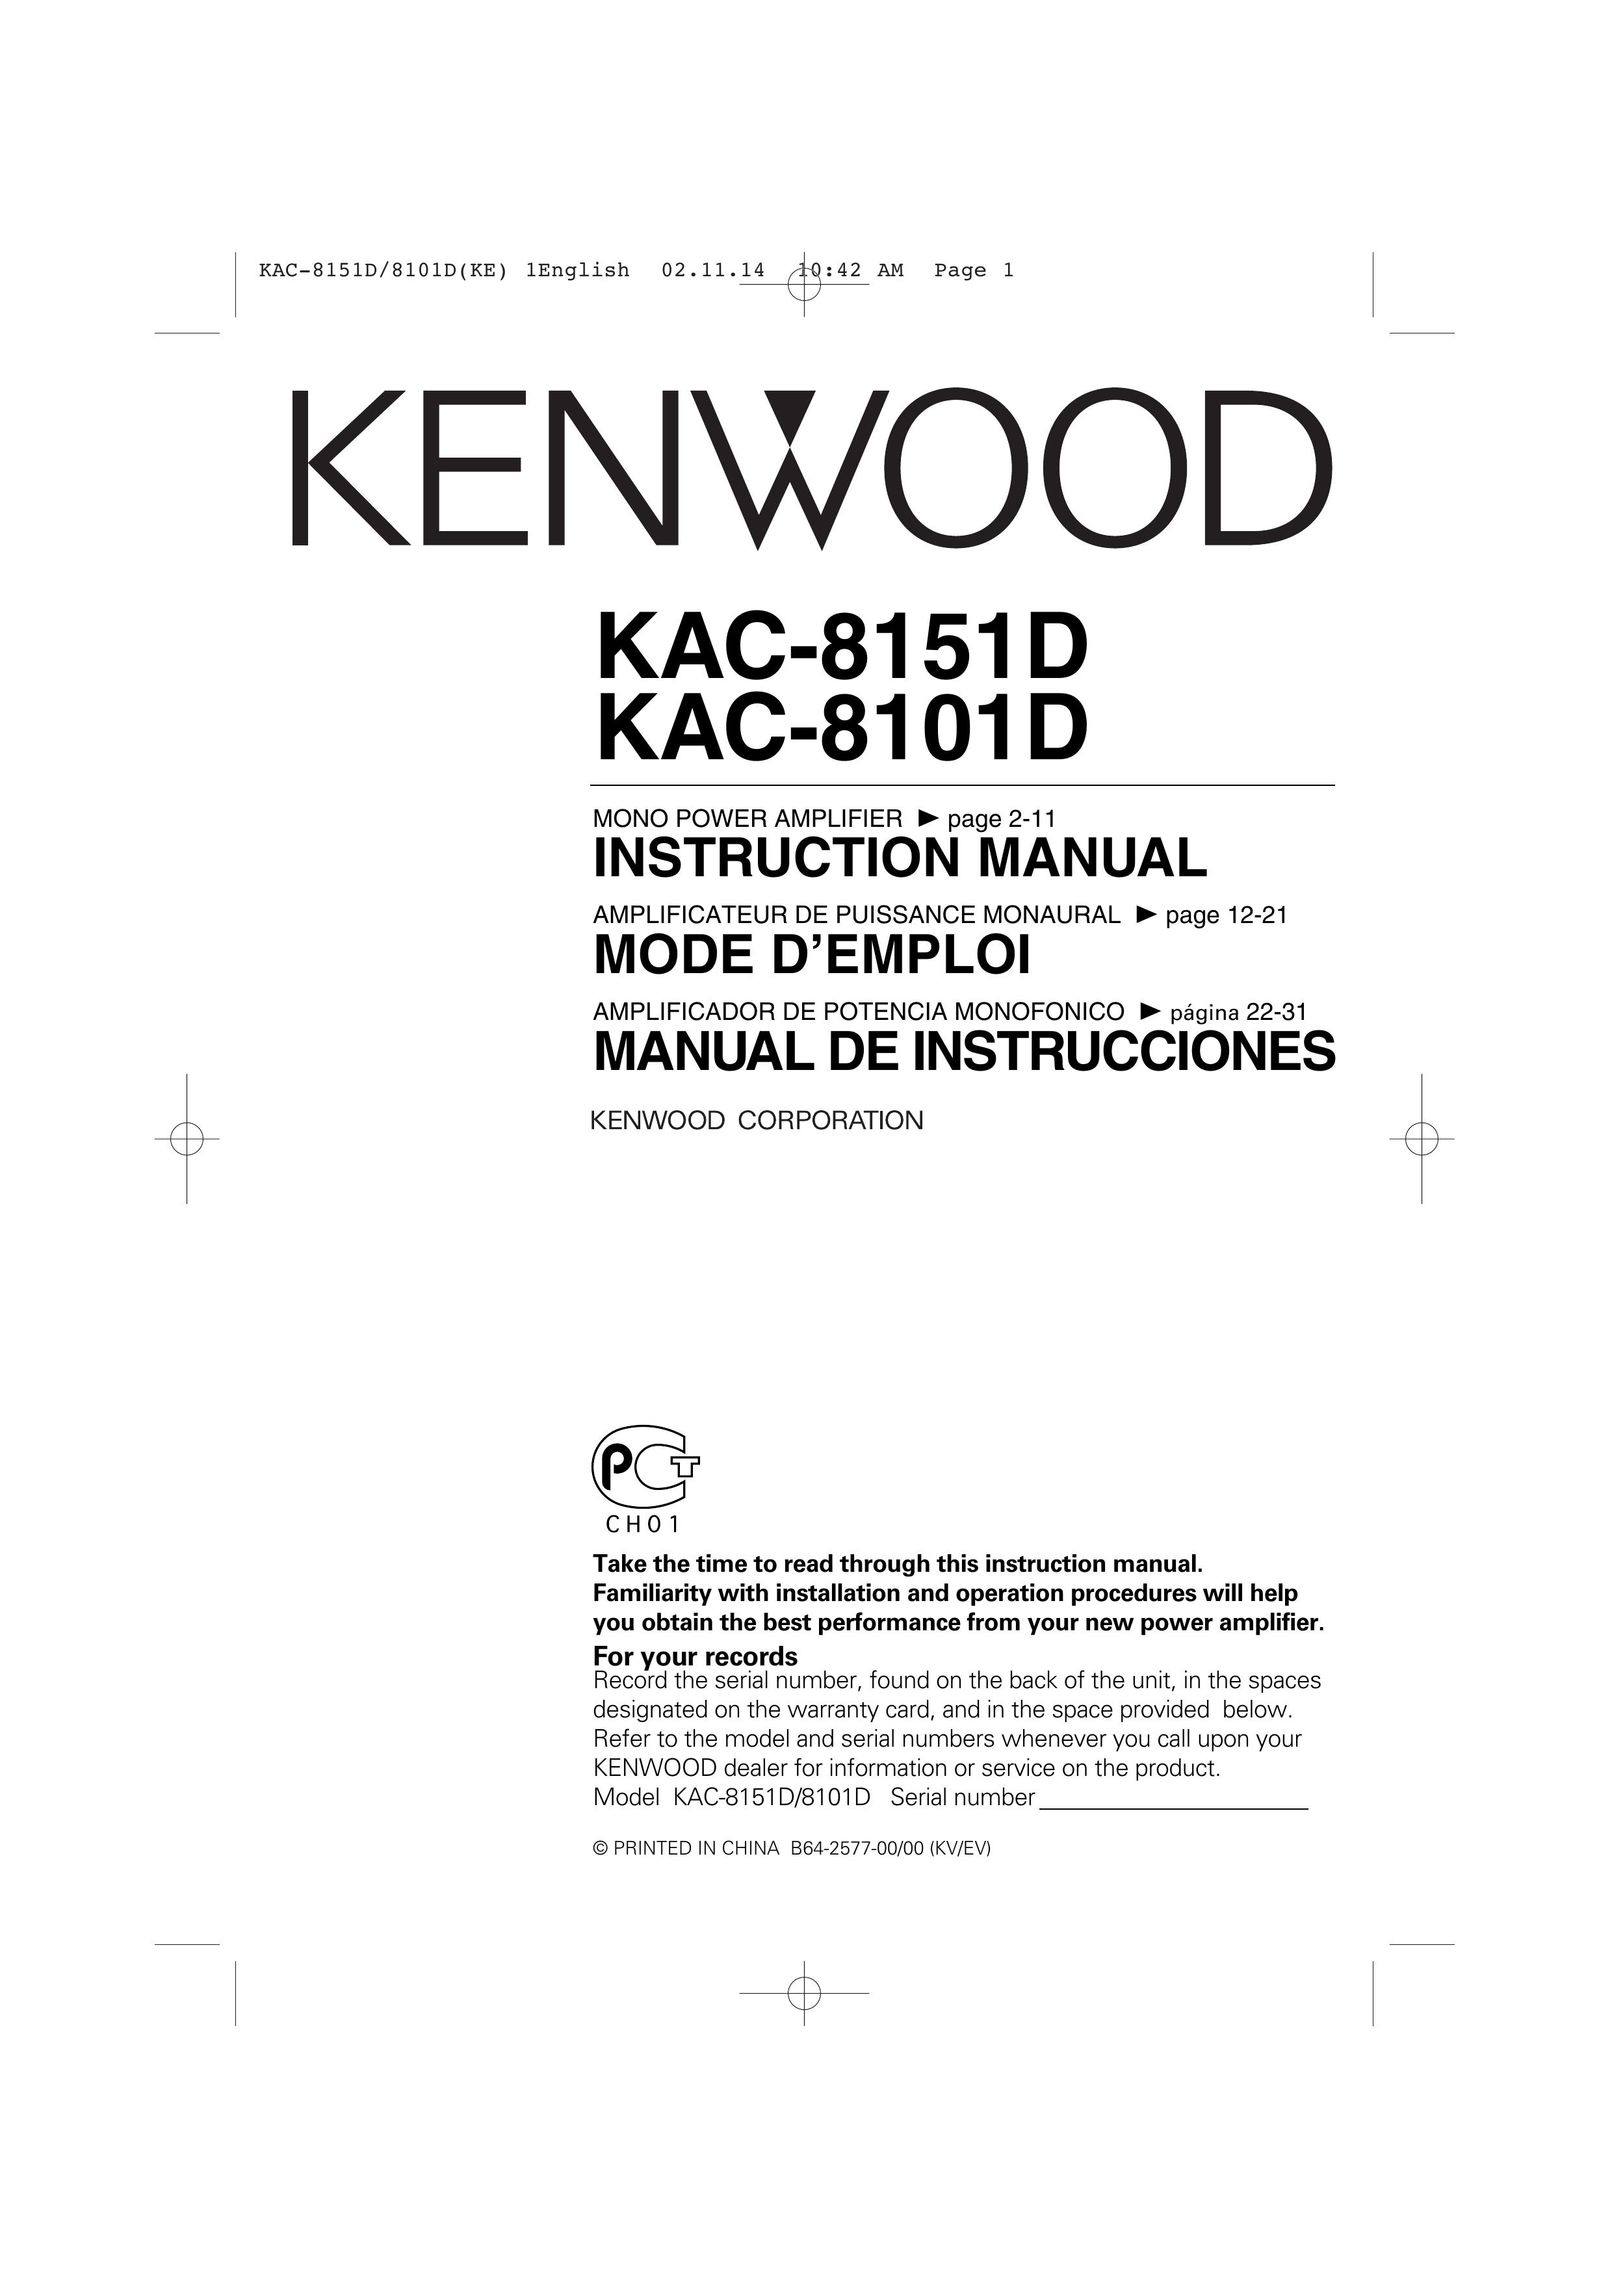 Kenwood KAC-8101D Stereo Amplifier User Manual